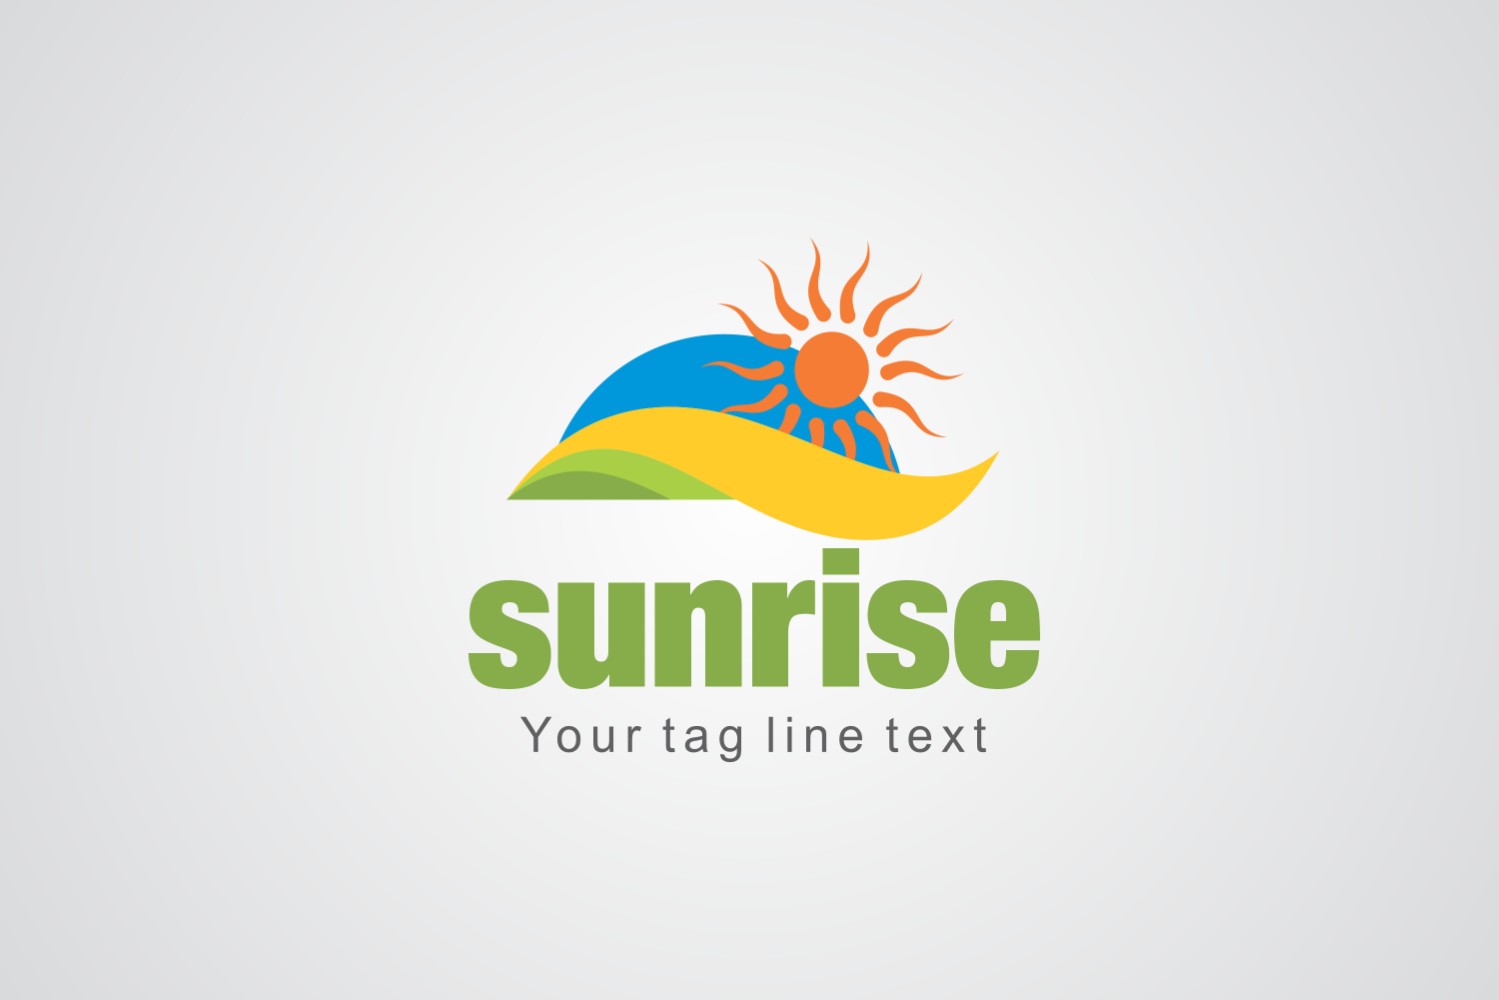 Sunrise Logo Design Template